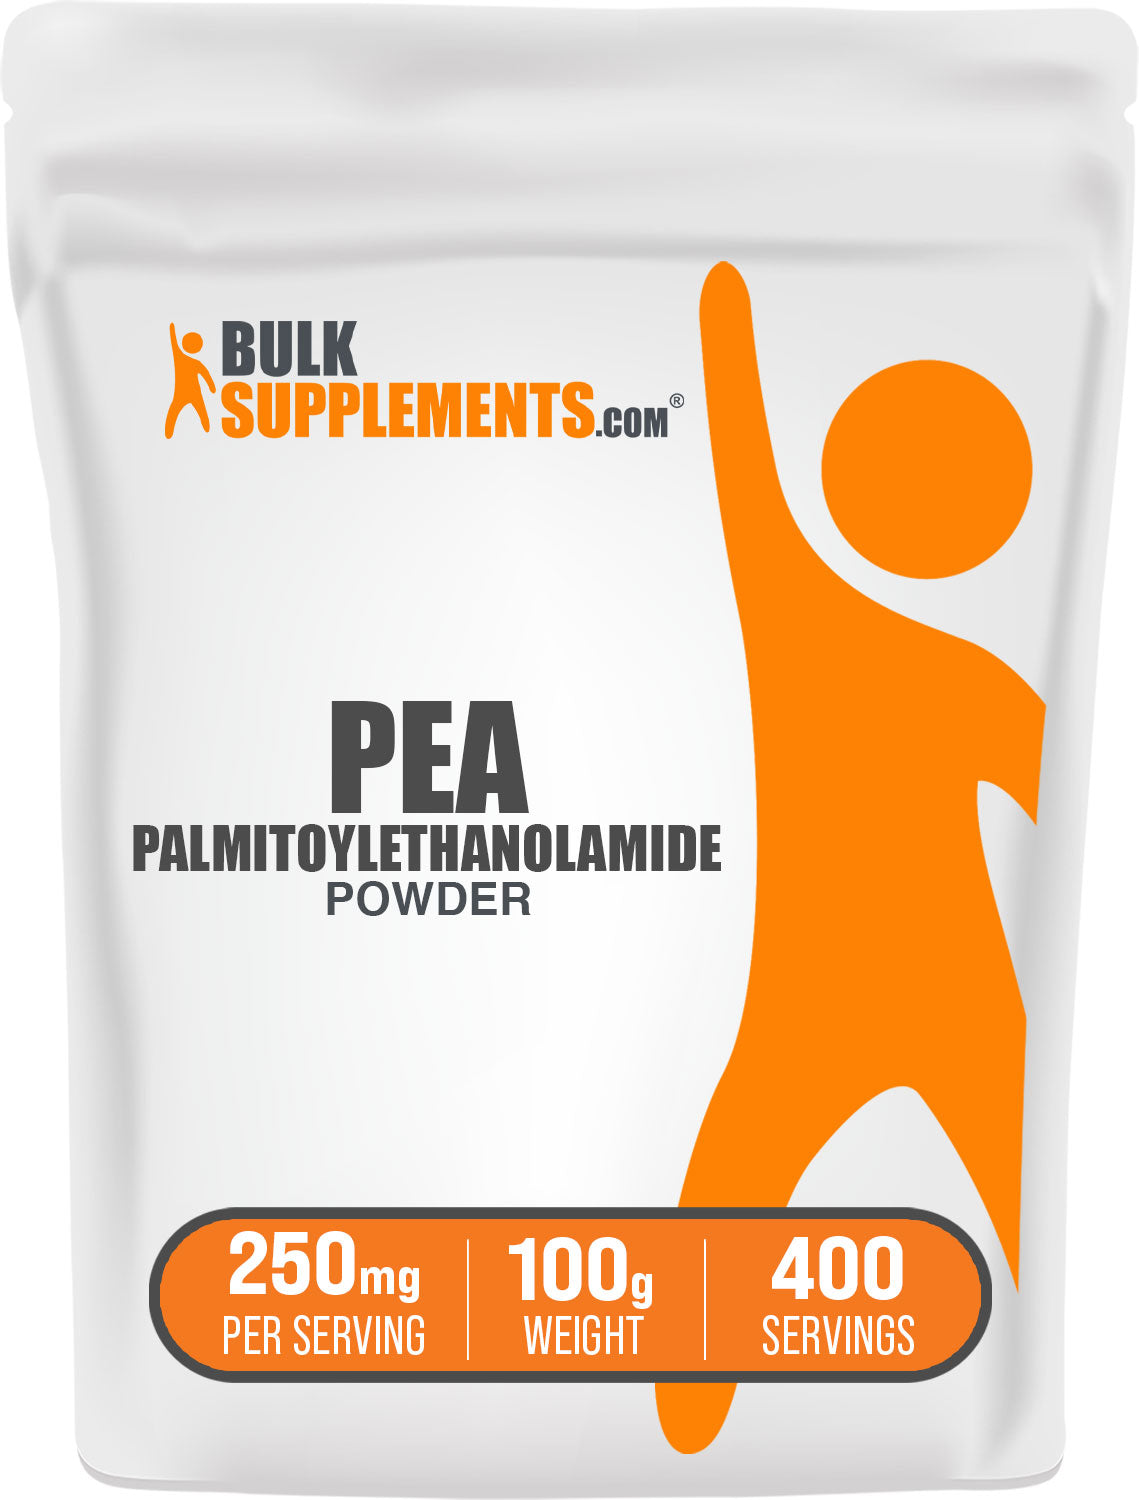 BulkSupplements.com Palmitoylethanolamide (PEA) Powder 100g bag